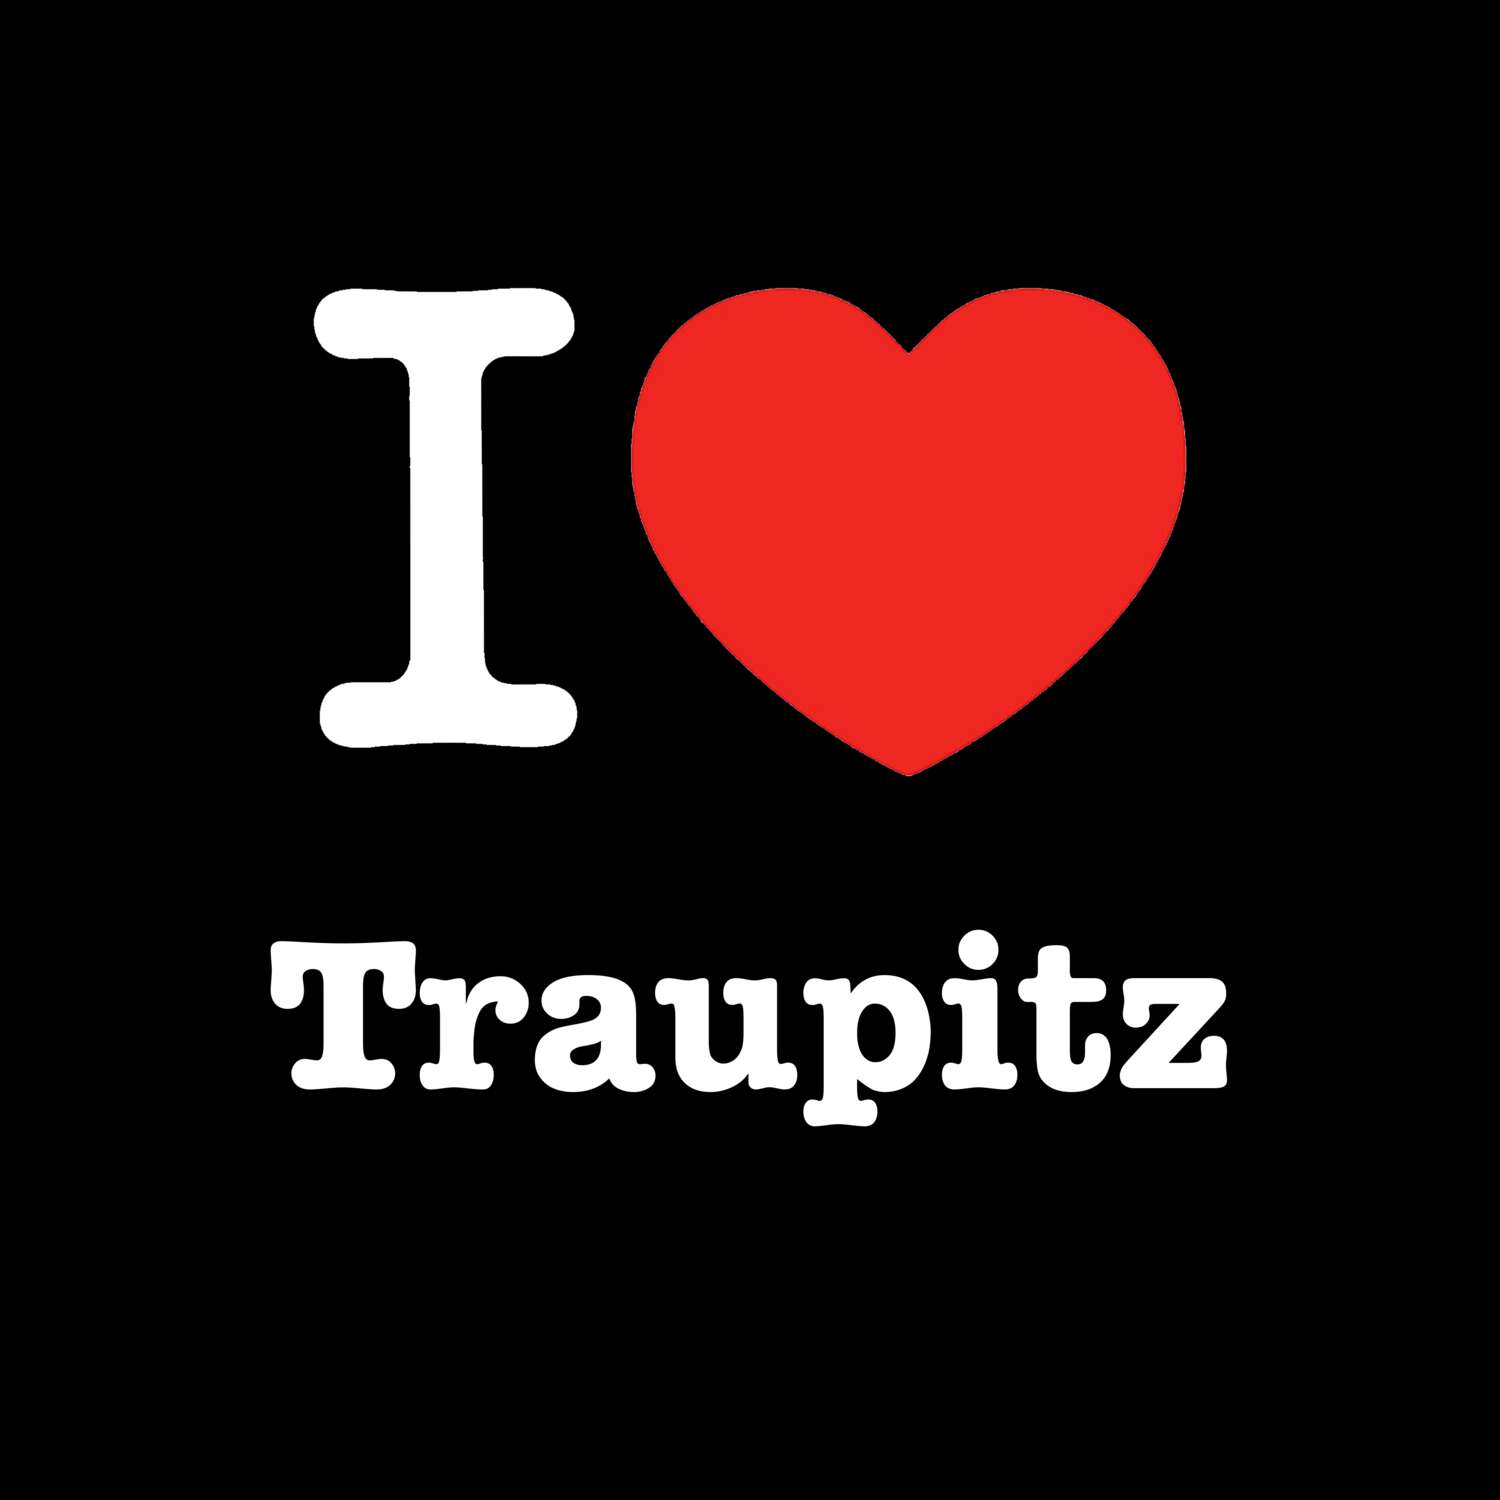 Traupitz T-Shirt »I love«